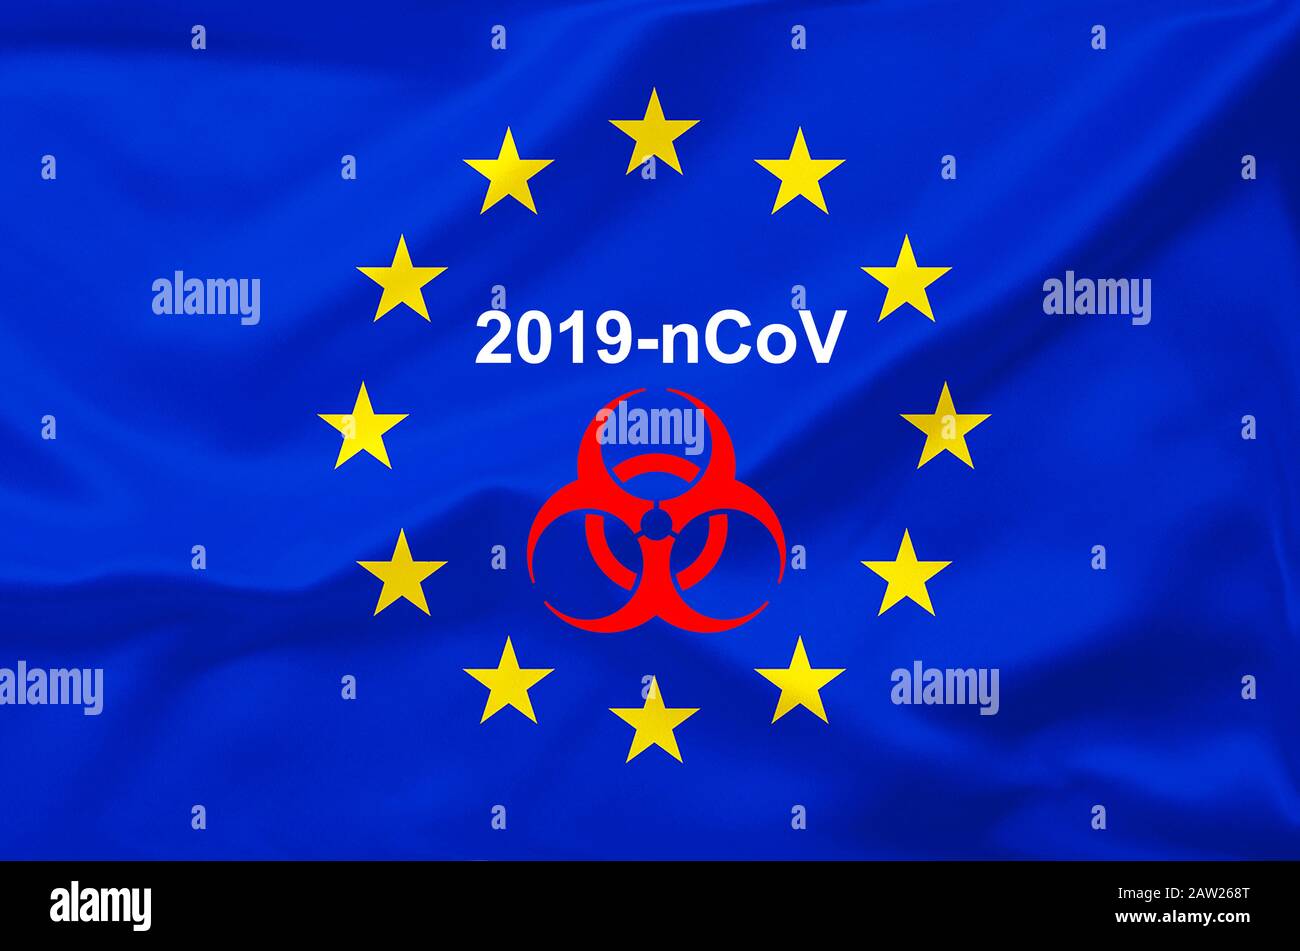 EU flag and coronavirus, 2019-nCoV Stock Photo